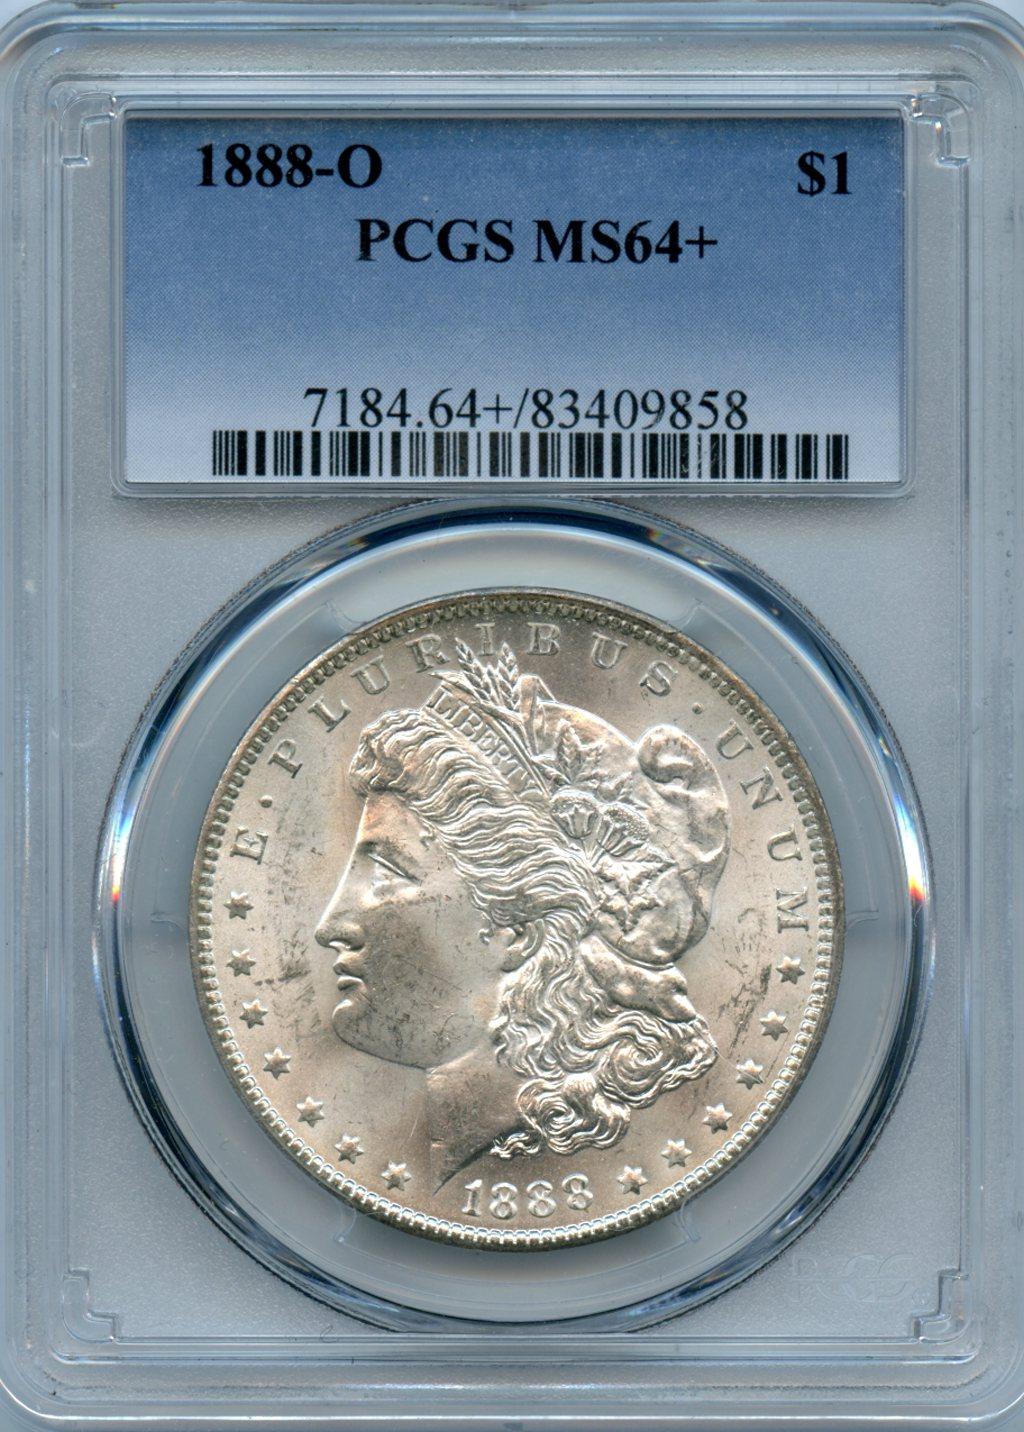 1888-O Morgan Silver Dollar in PCGS MS 64+